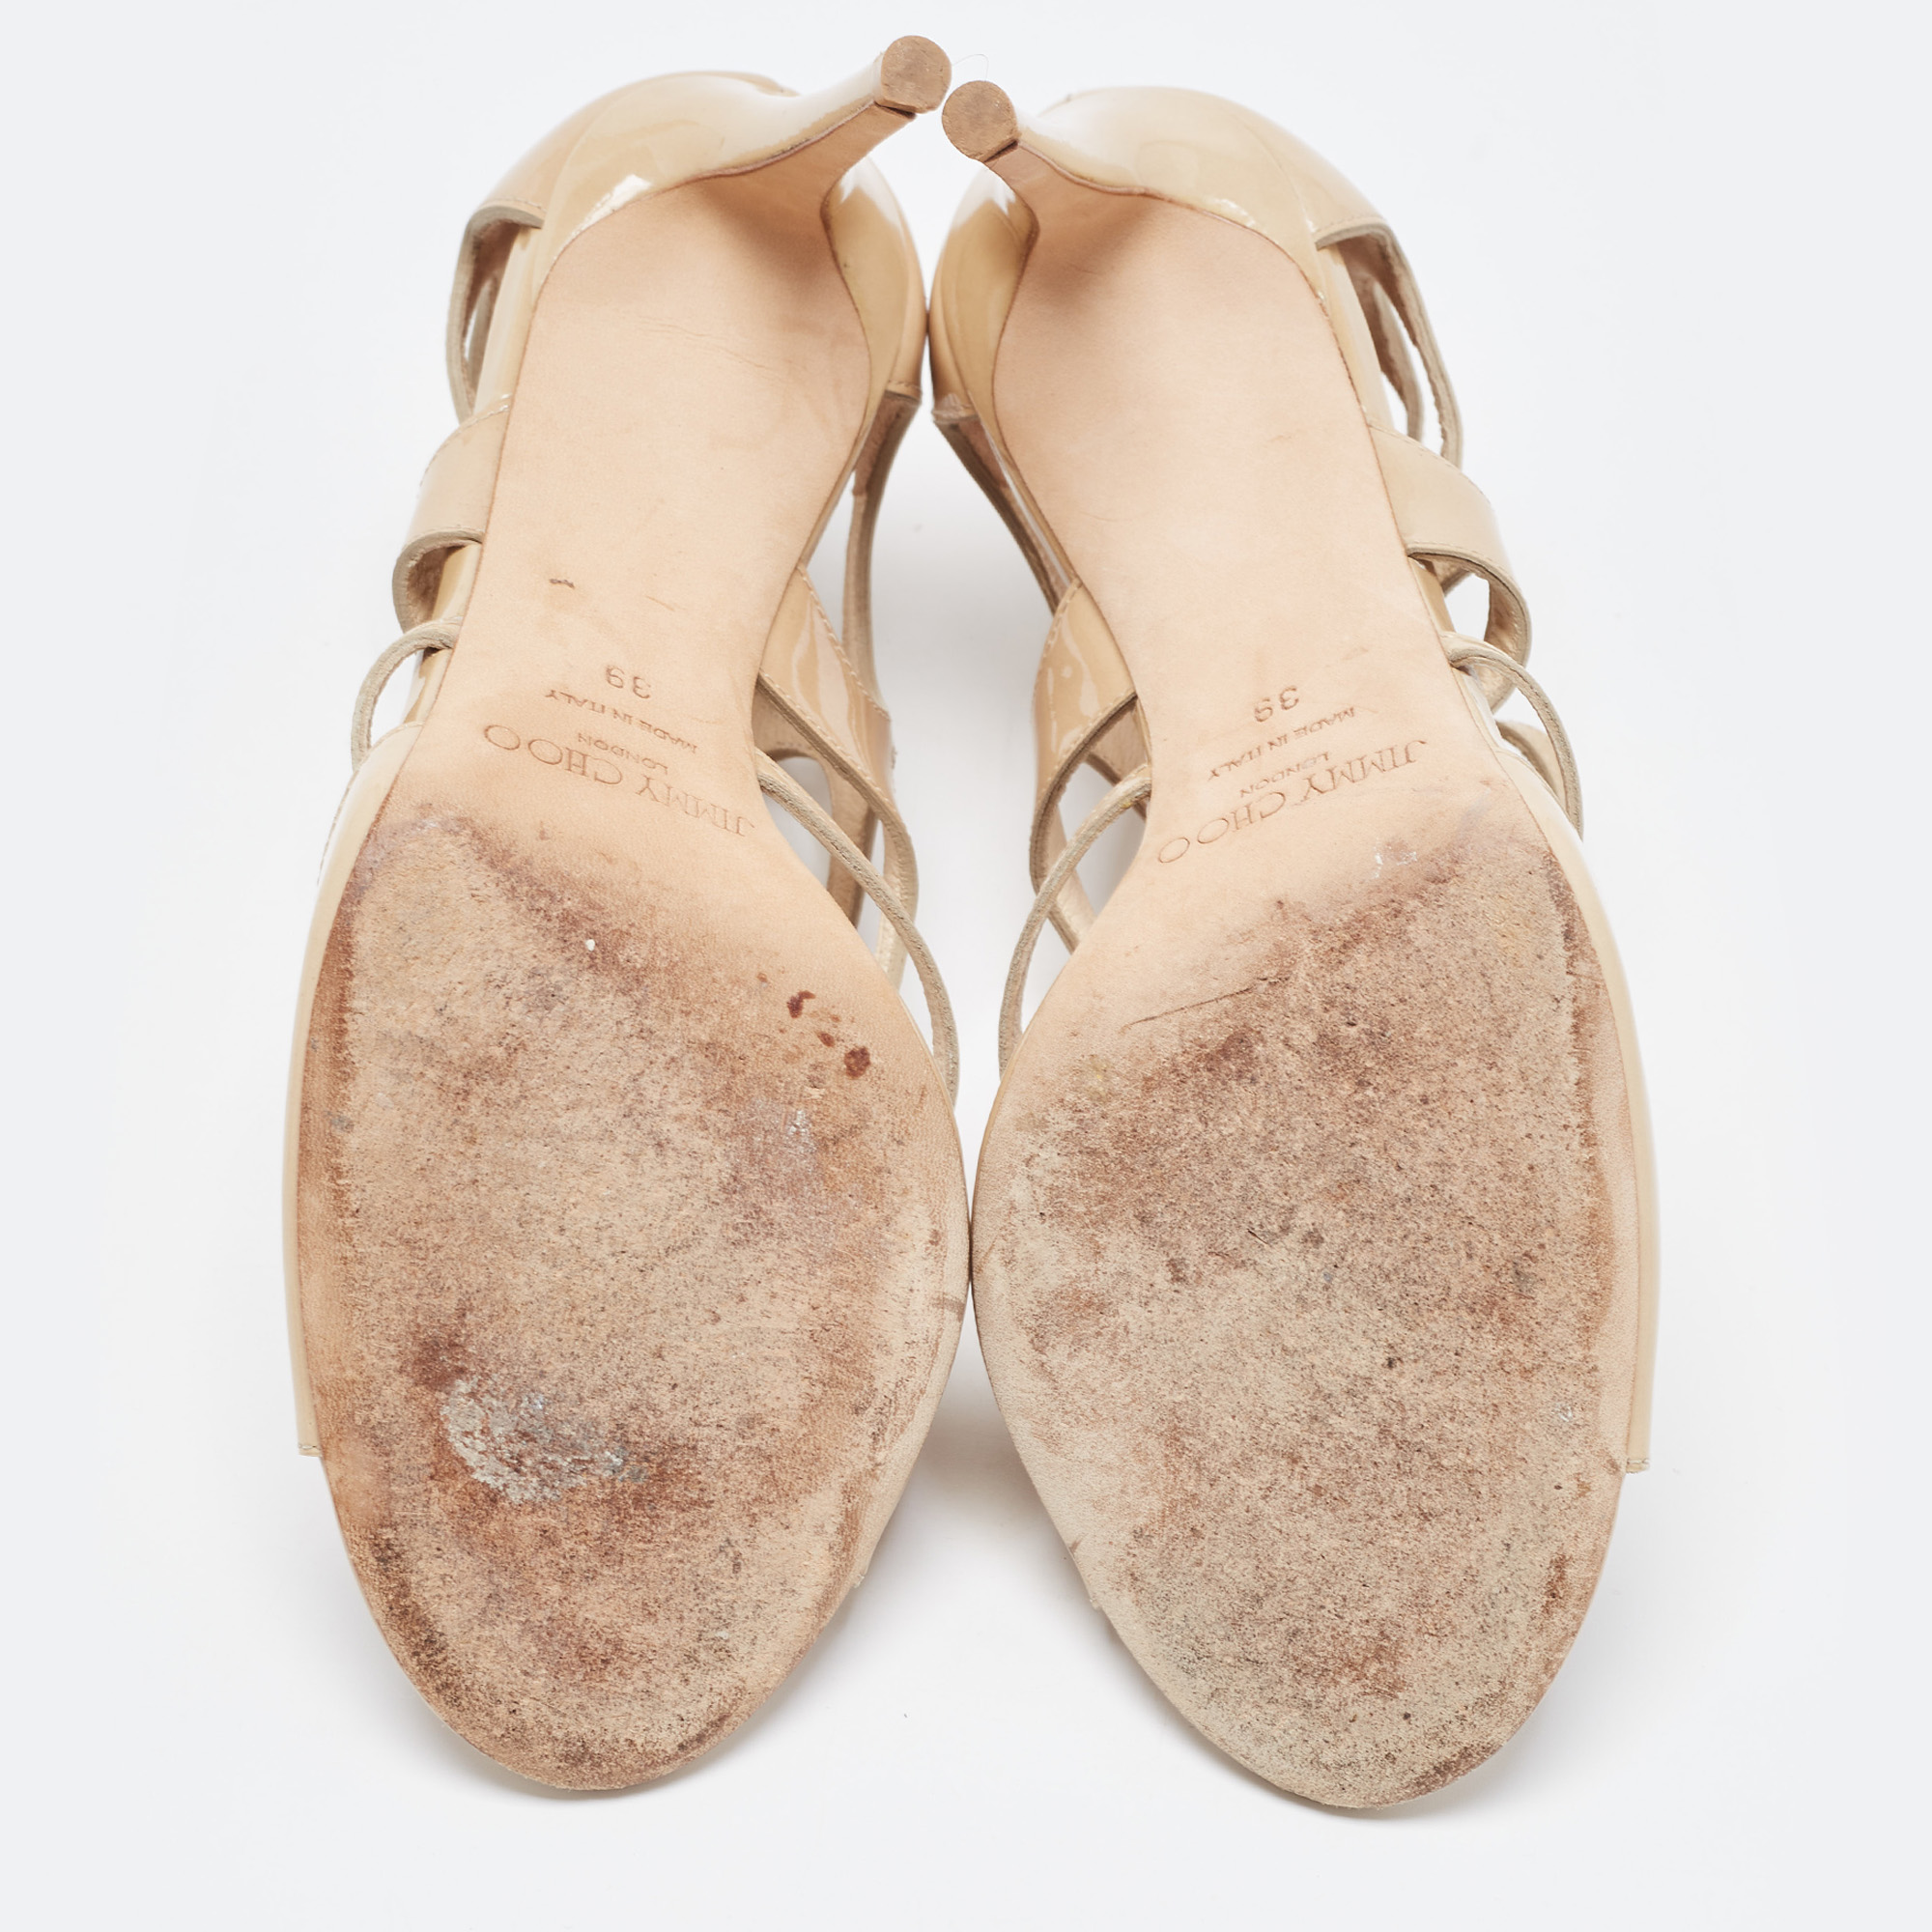 Jimmy Choo Beige Patent Leather Ren Sandals Size 39